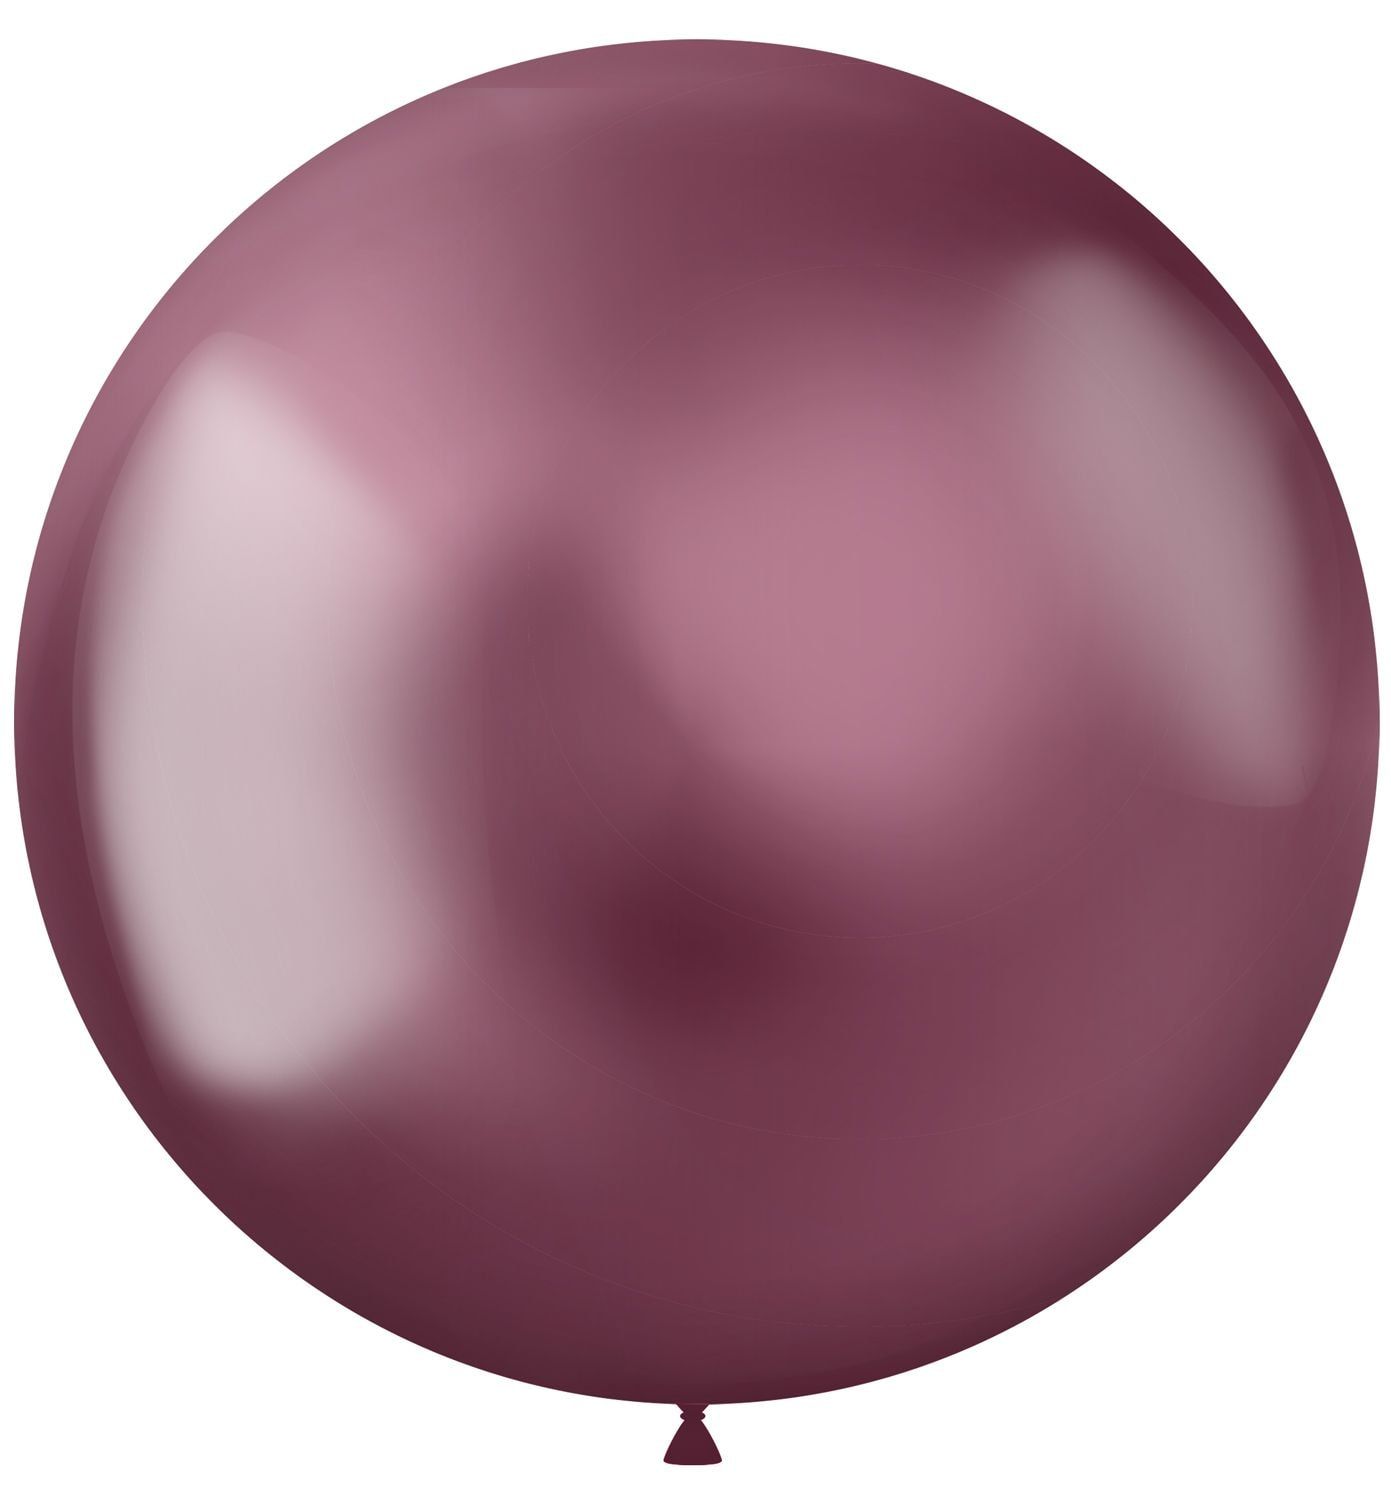 Ballonnen groot metallic roze